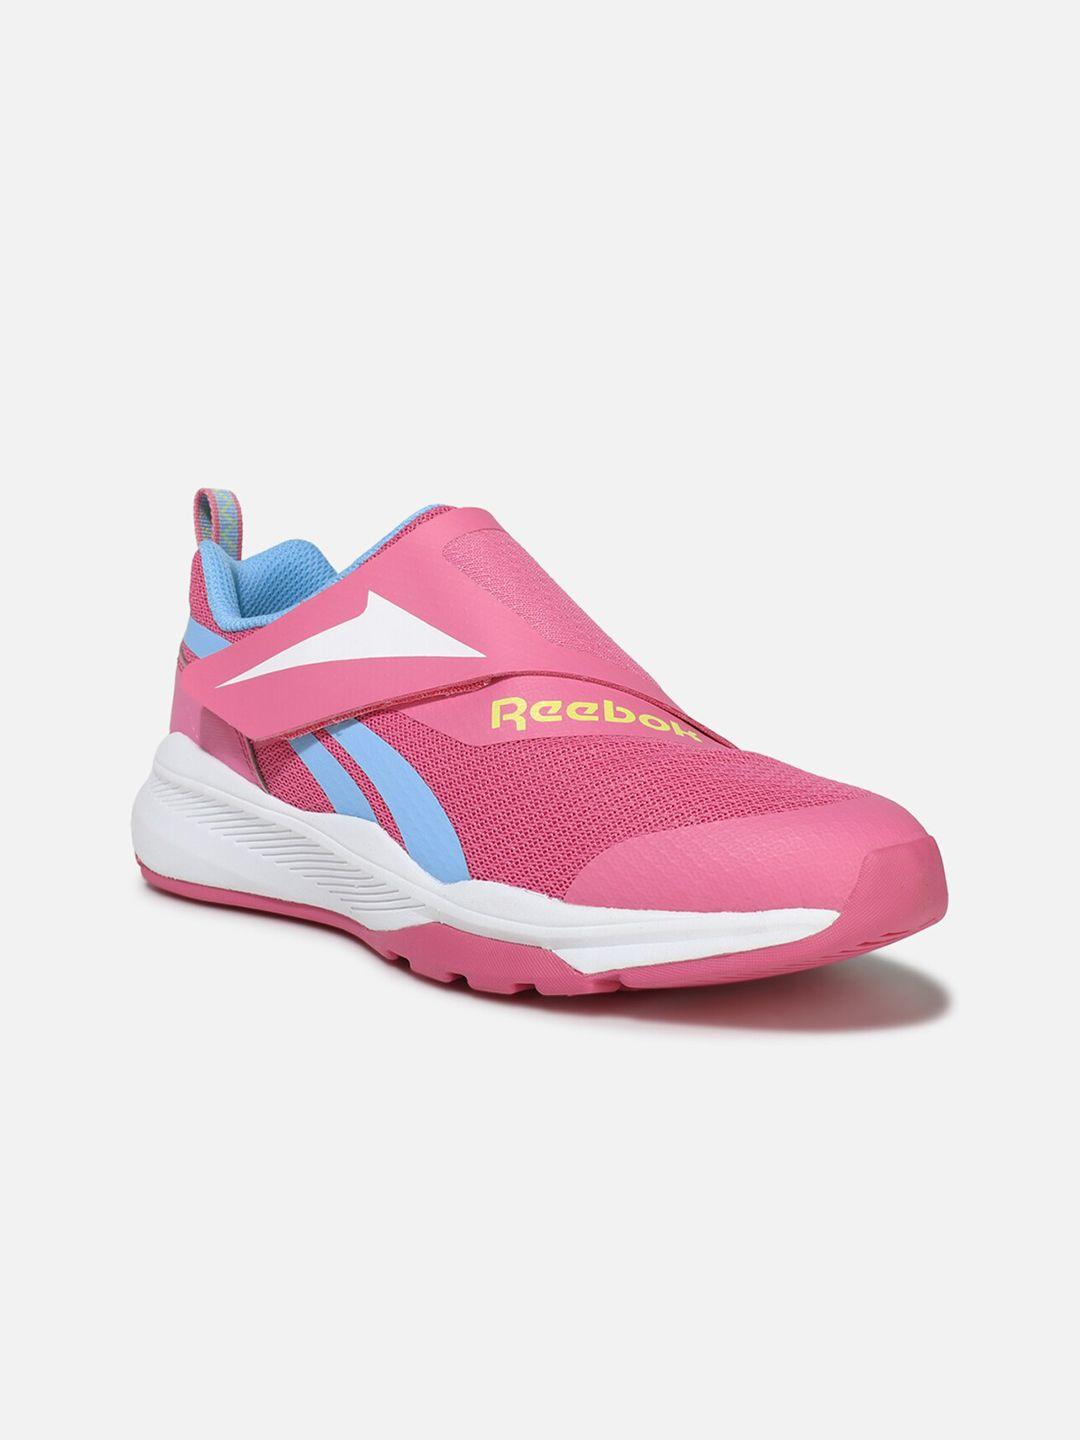 Reebok Girls Equal Fit Running Shoes